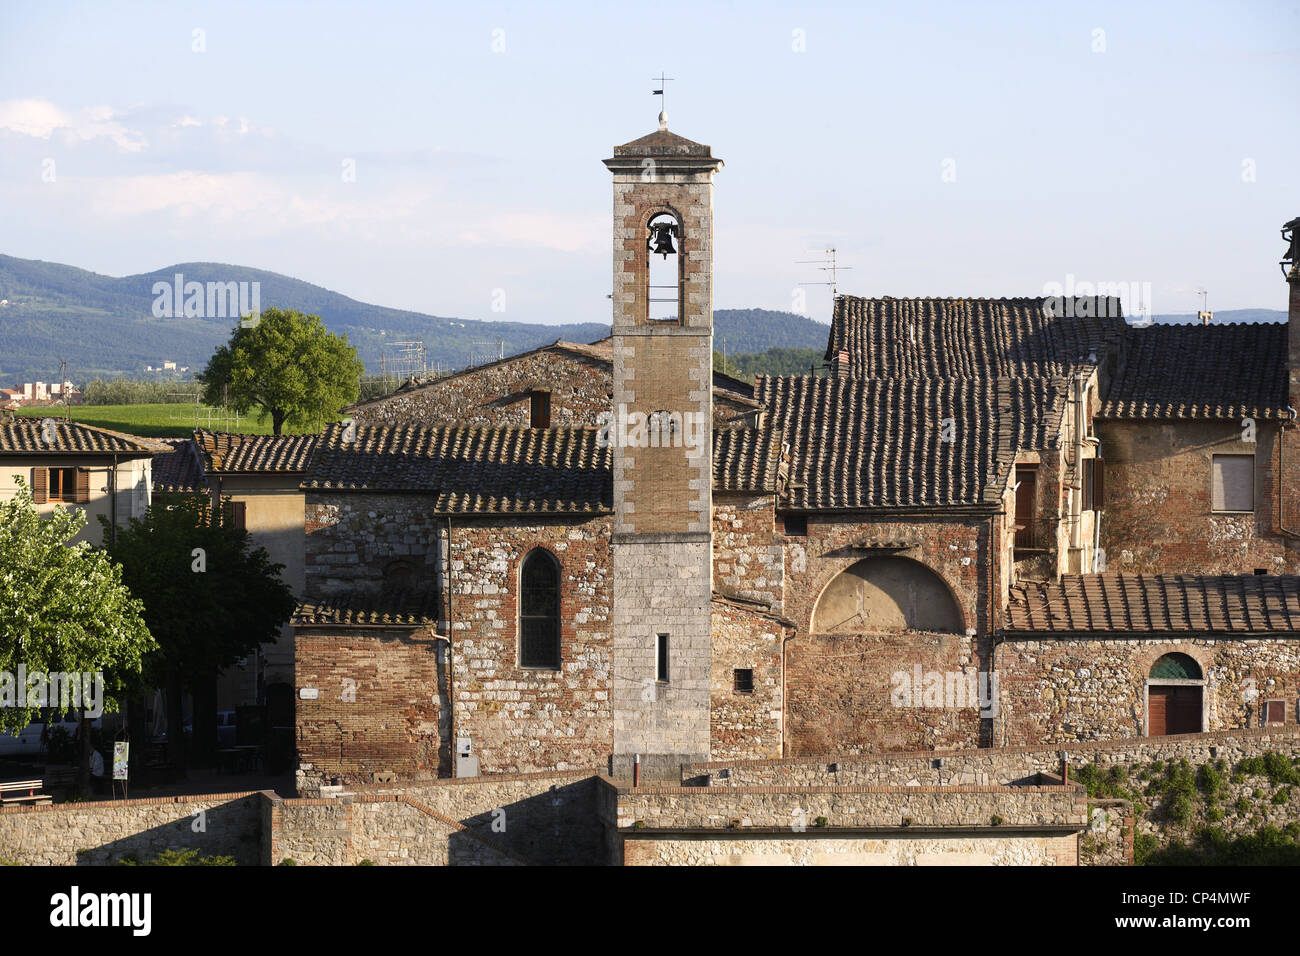 Church of Saint Catherine. Italy, Tuscany Region, Colle Val d'Elsa (Si). Stock Photo